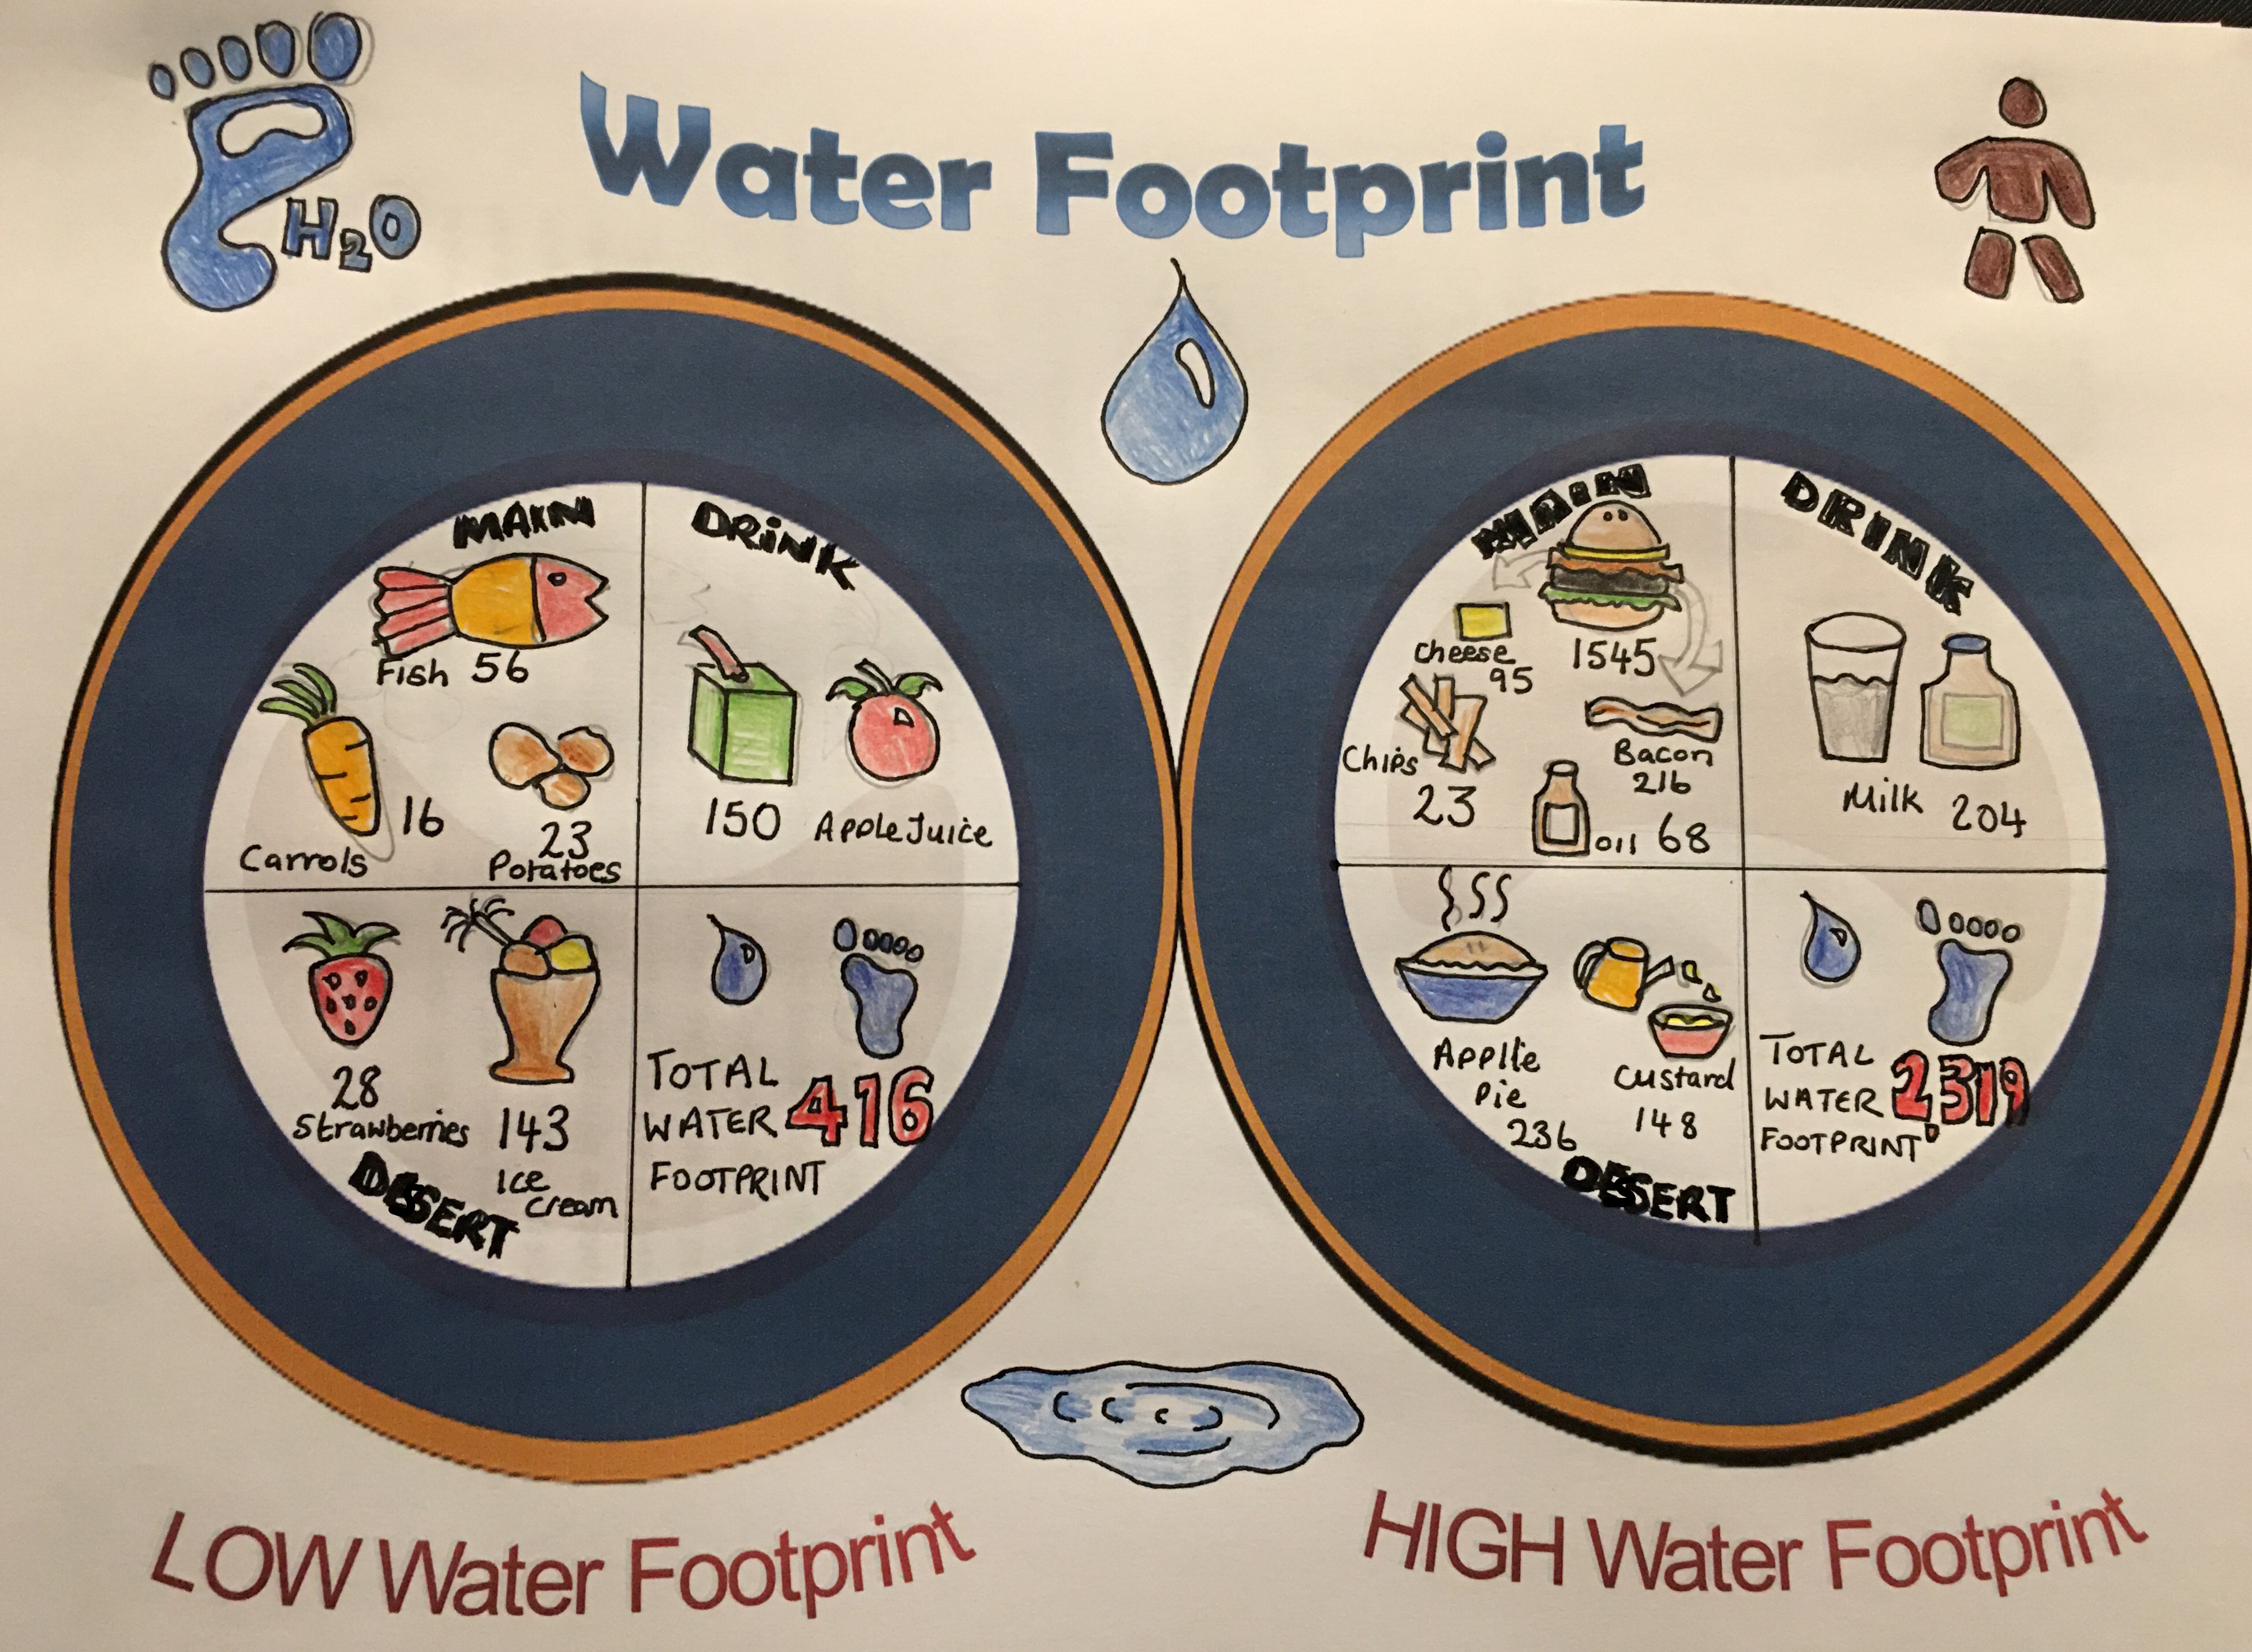 Year 9 pupil from Foyle College water footprint menu | NI Water News